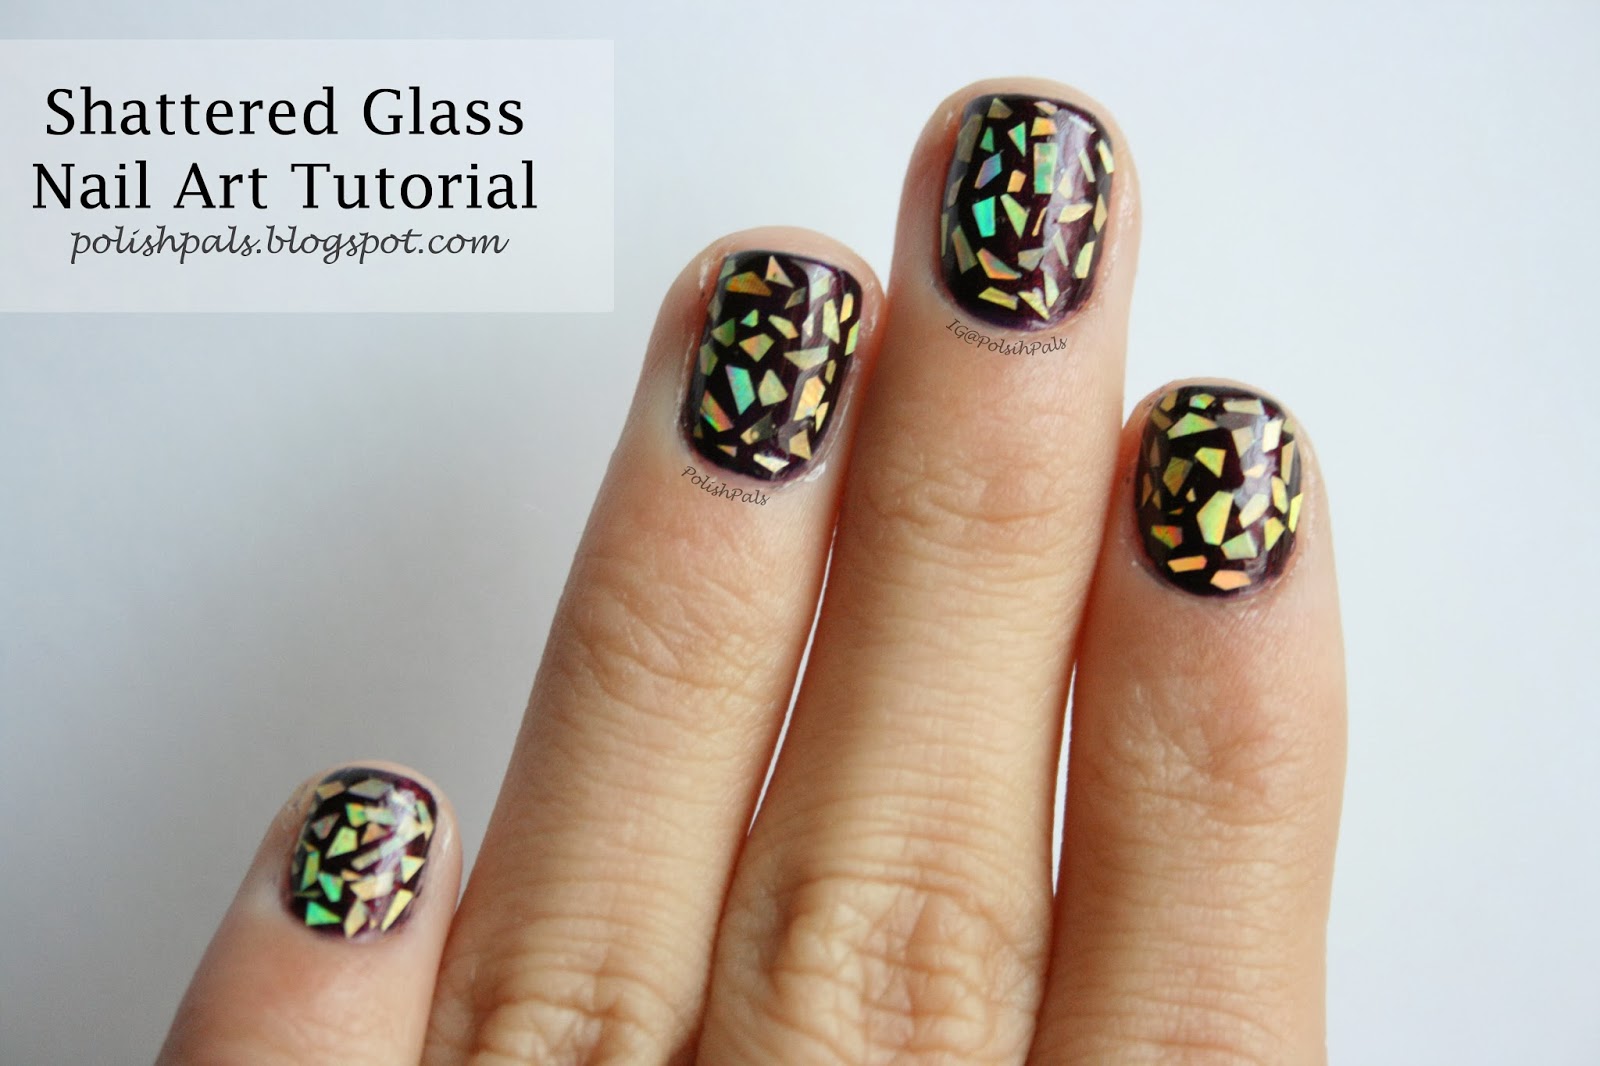 http://polishpals.blogspot.com/2013/12/shattered-glass-nail-tutorial.html